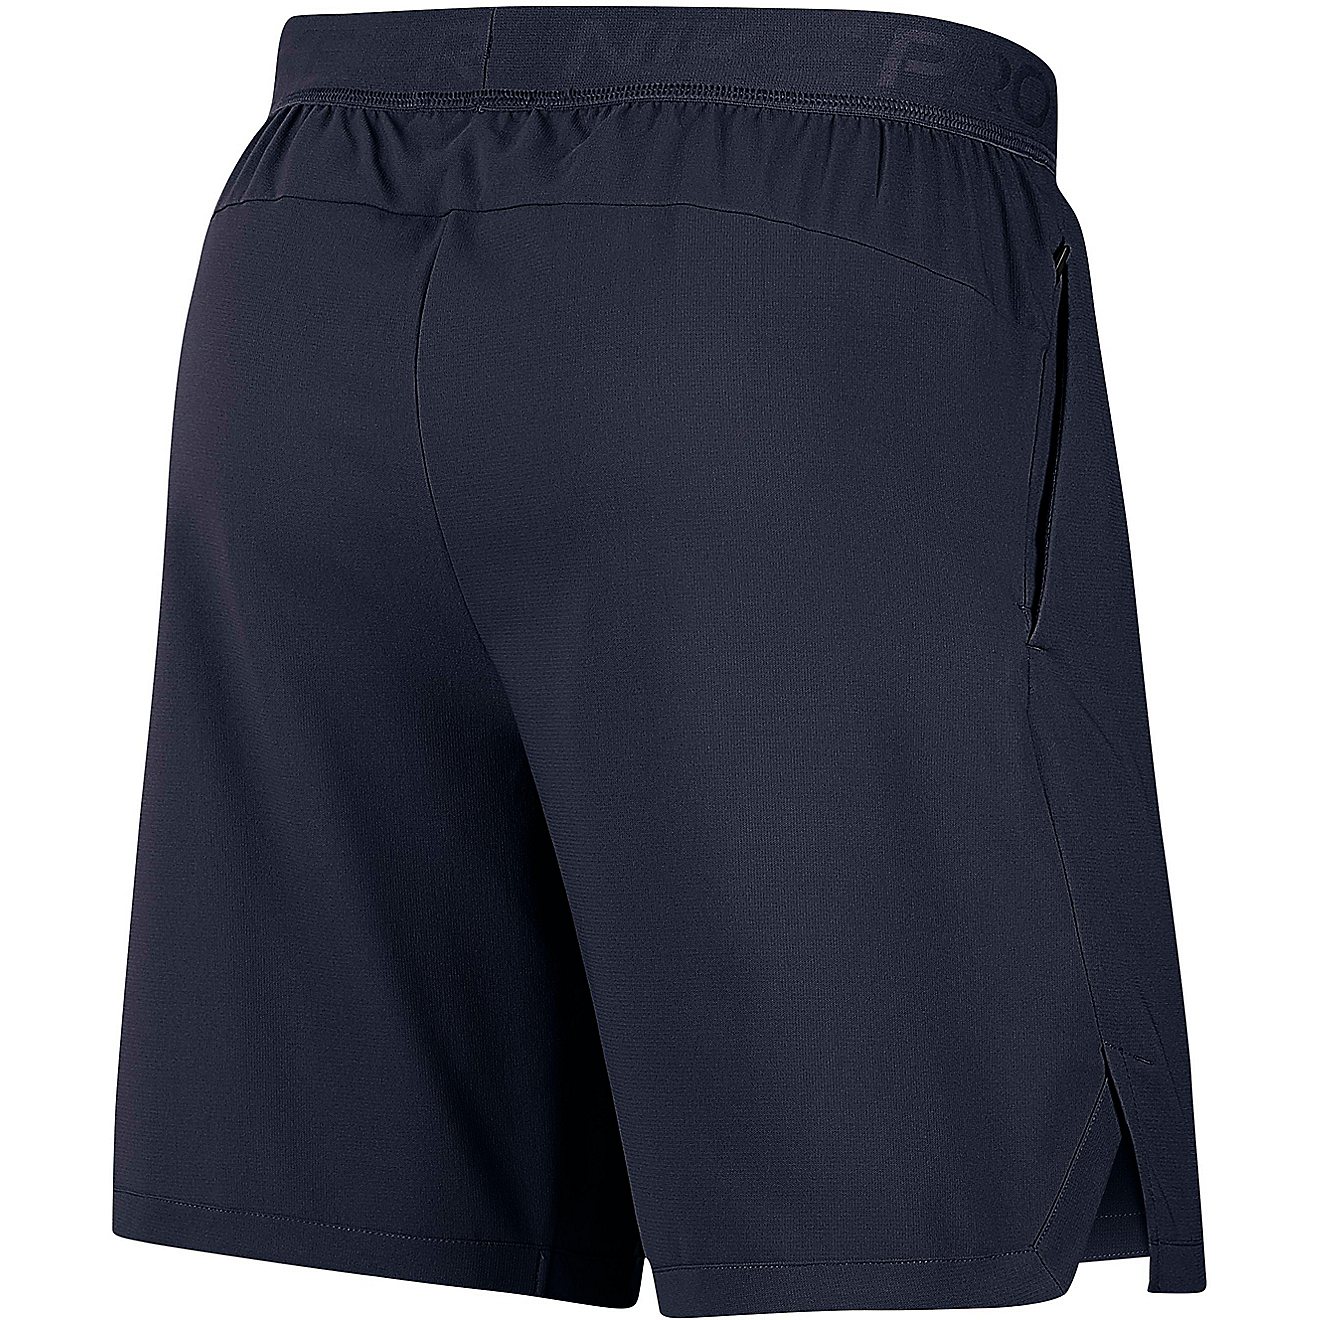 Nike Men's Flex Vent Max 3.0 Shorts | Free Shipping at Academy